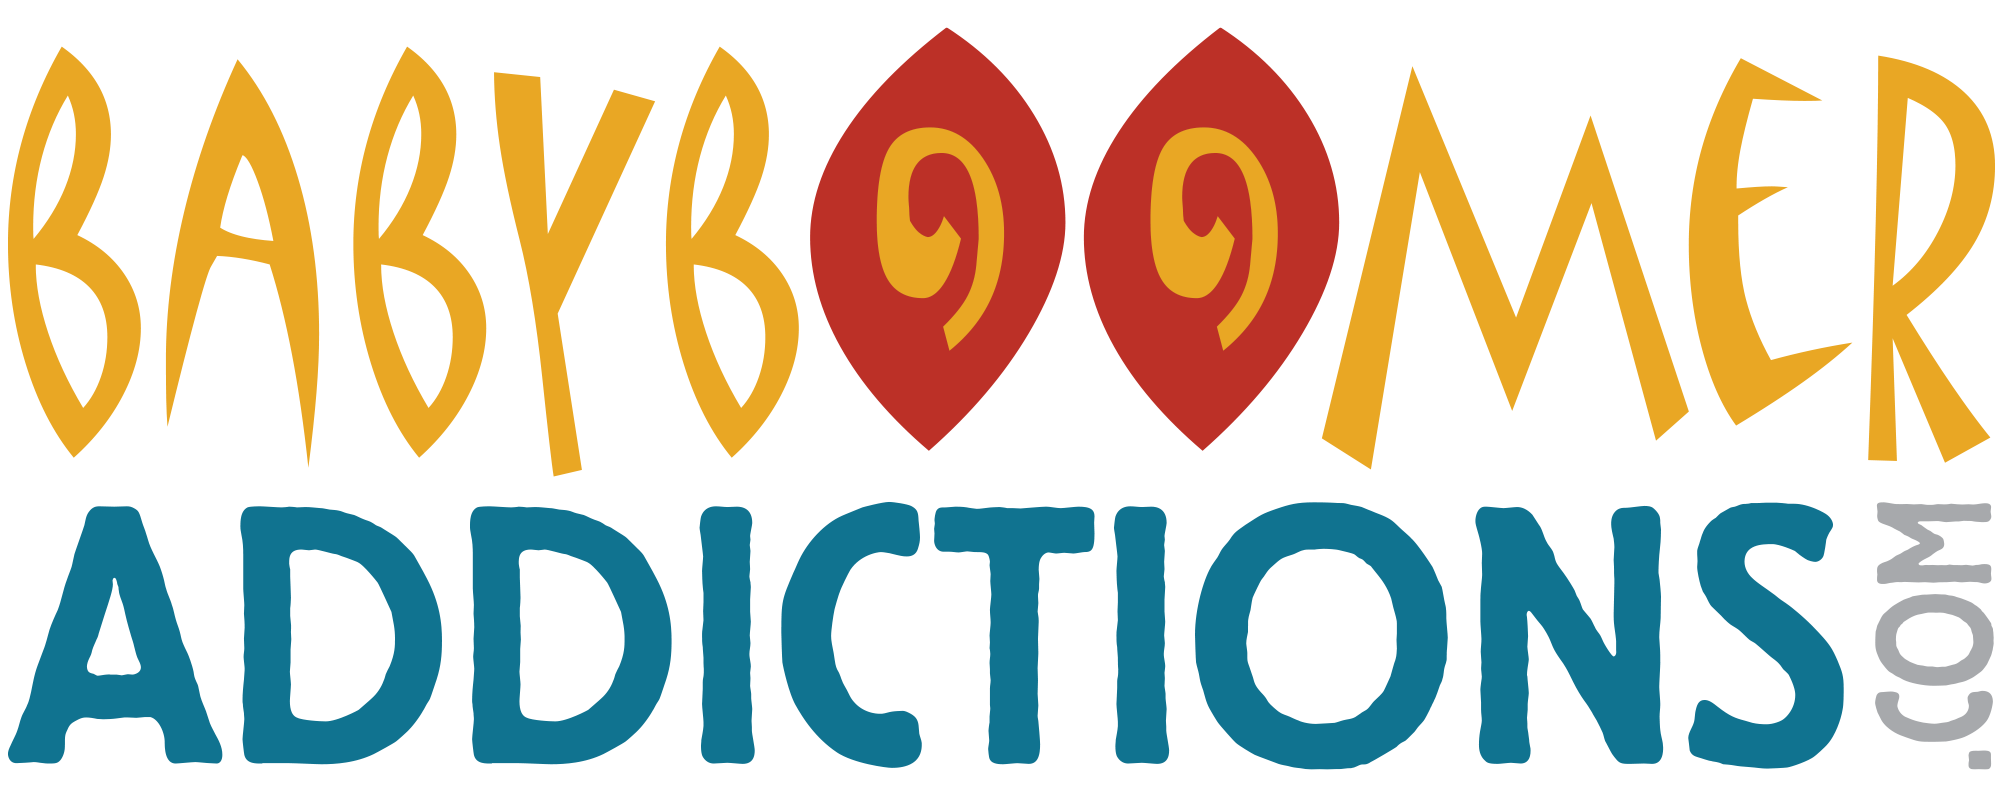 BabyBoomers.com logo